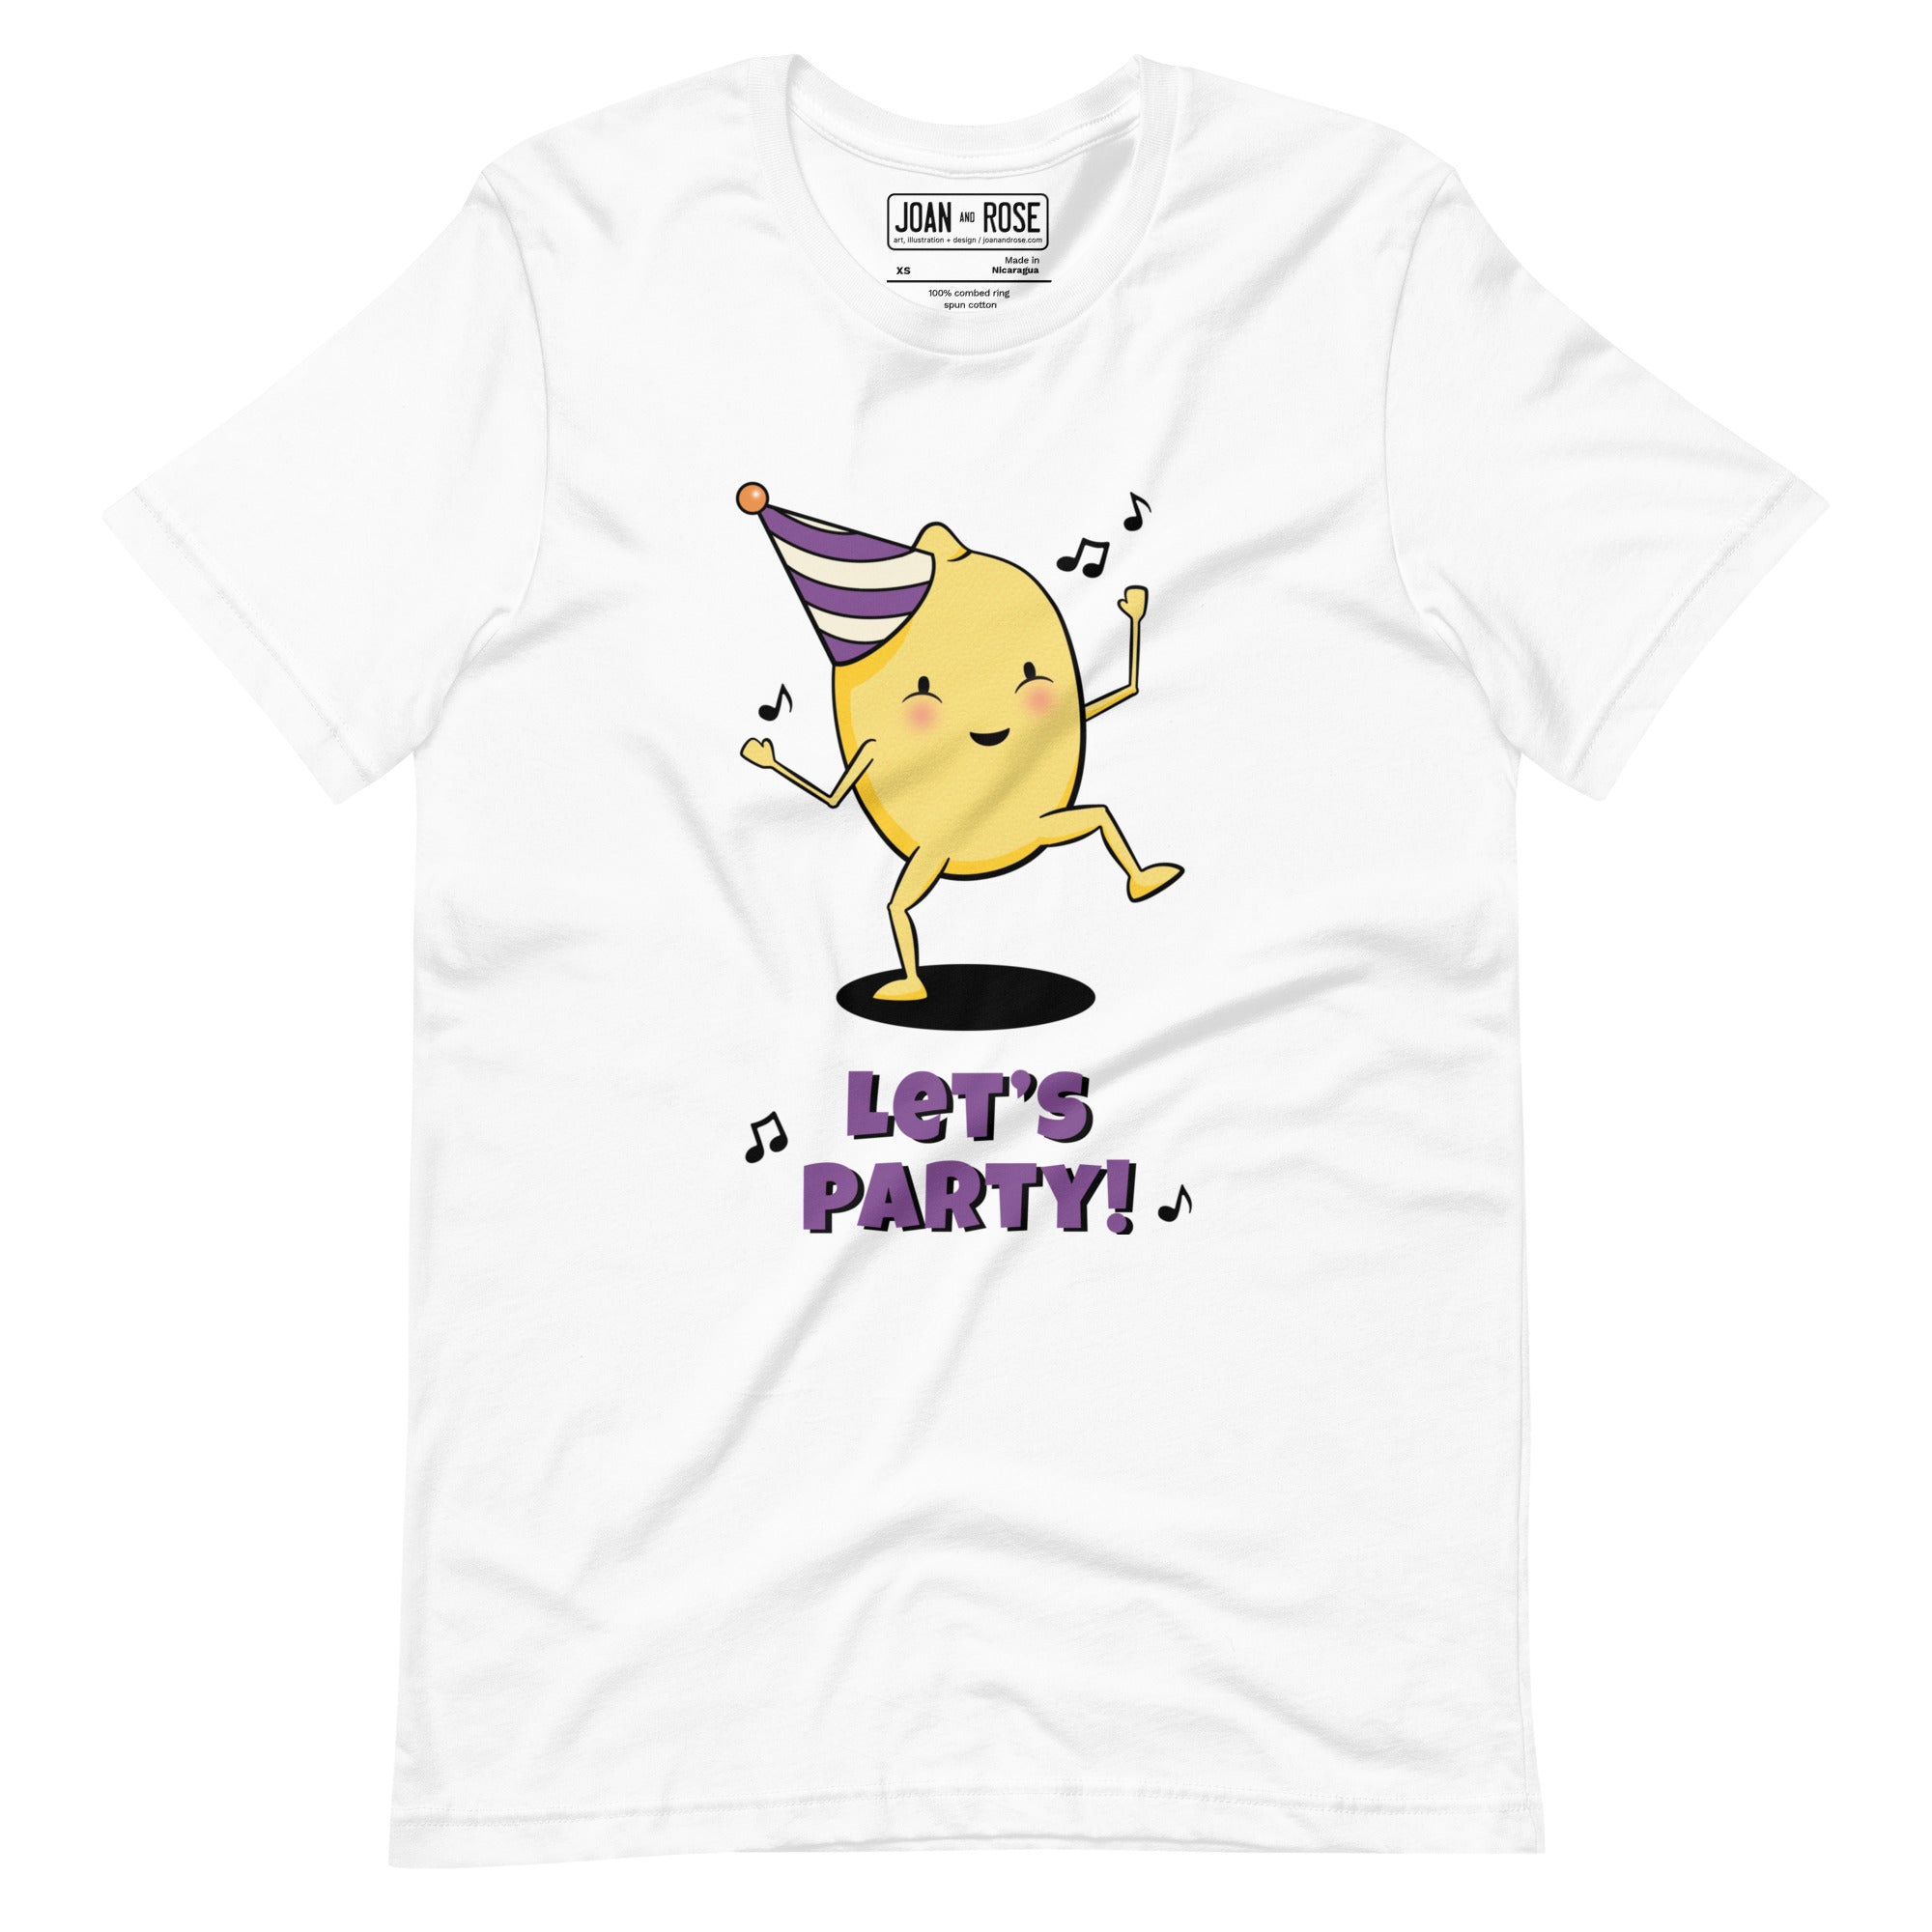 White version of Lemon Party t-shirt